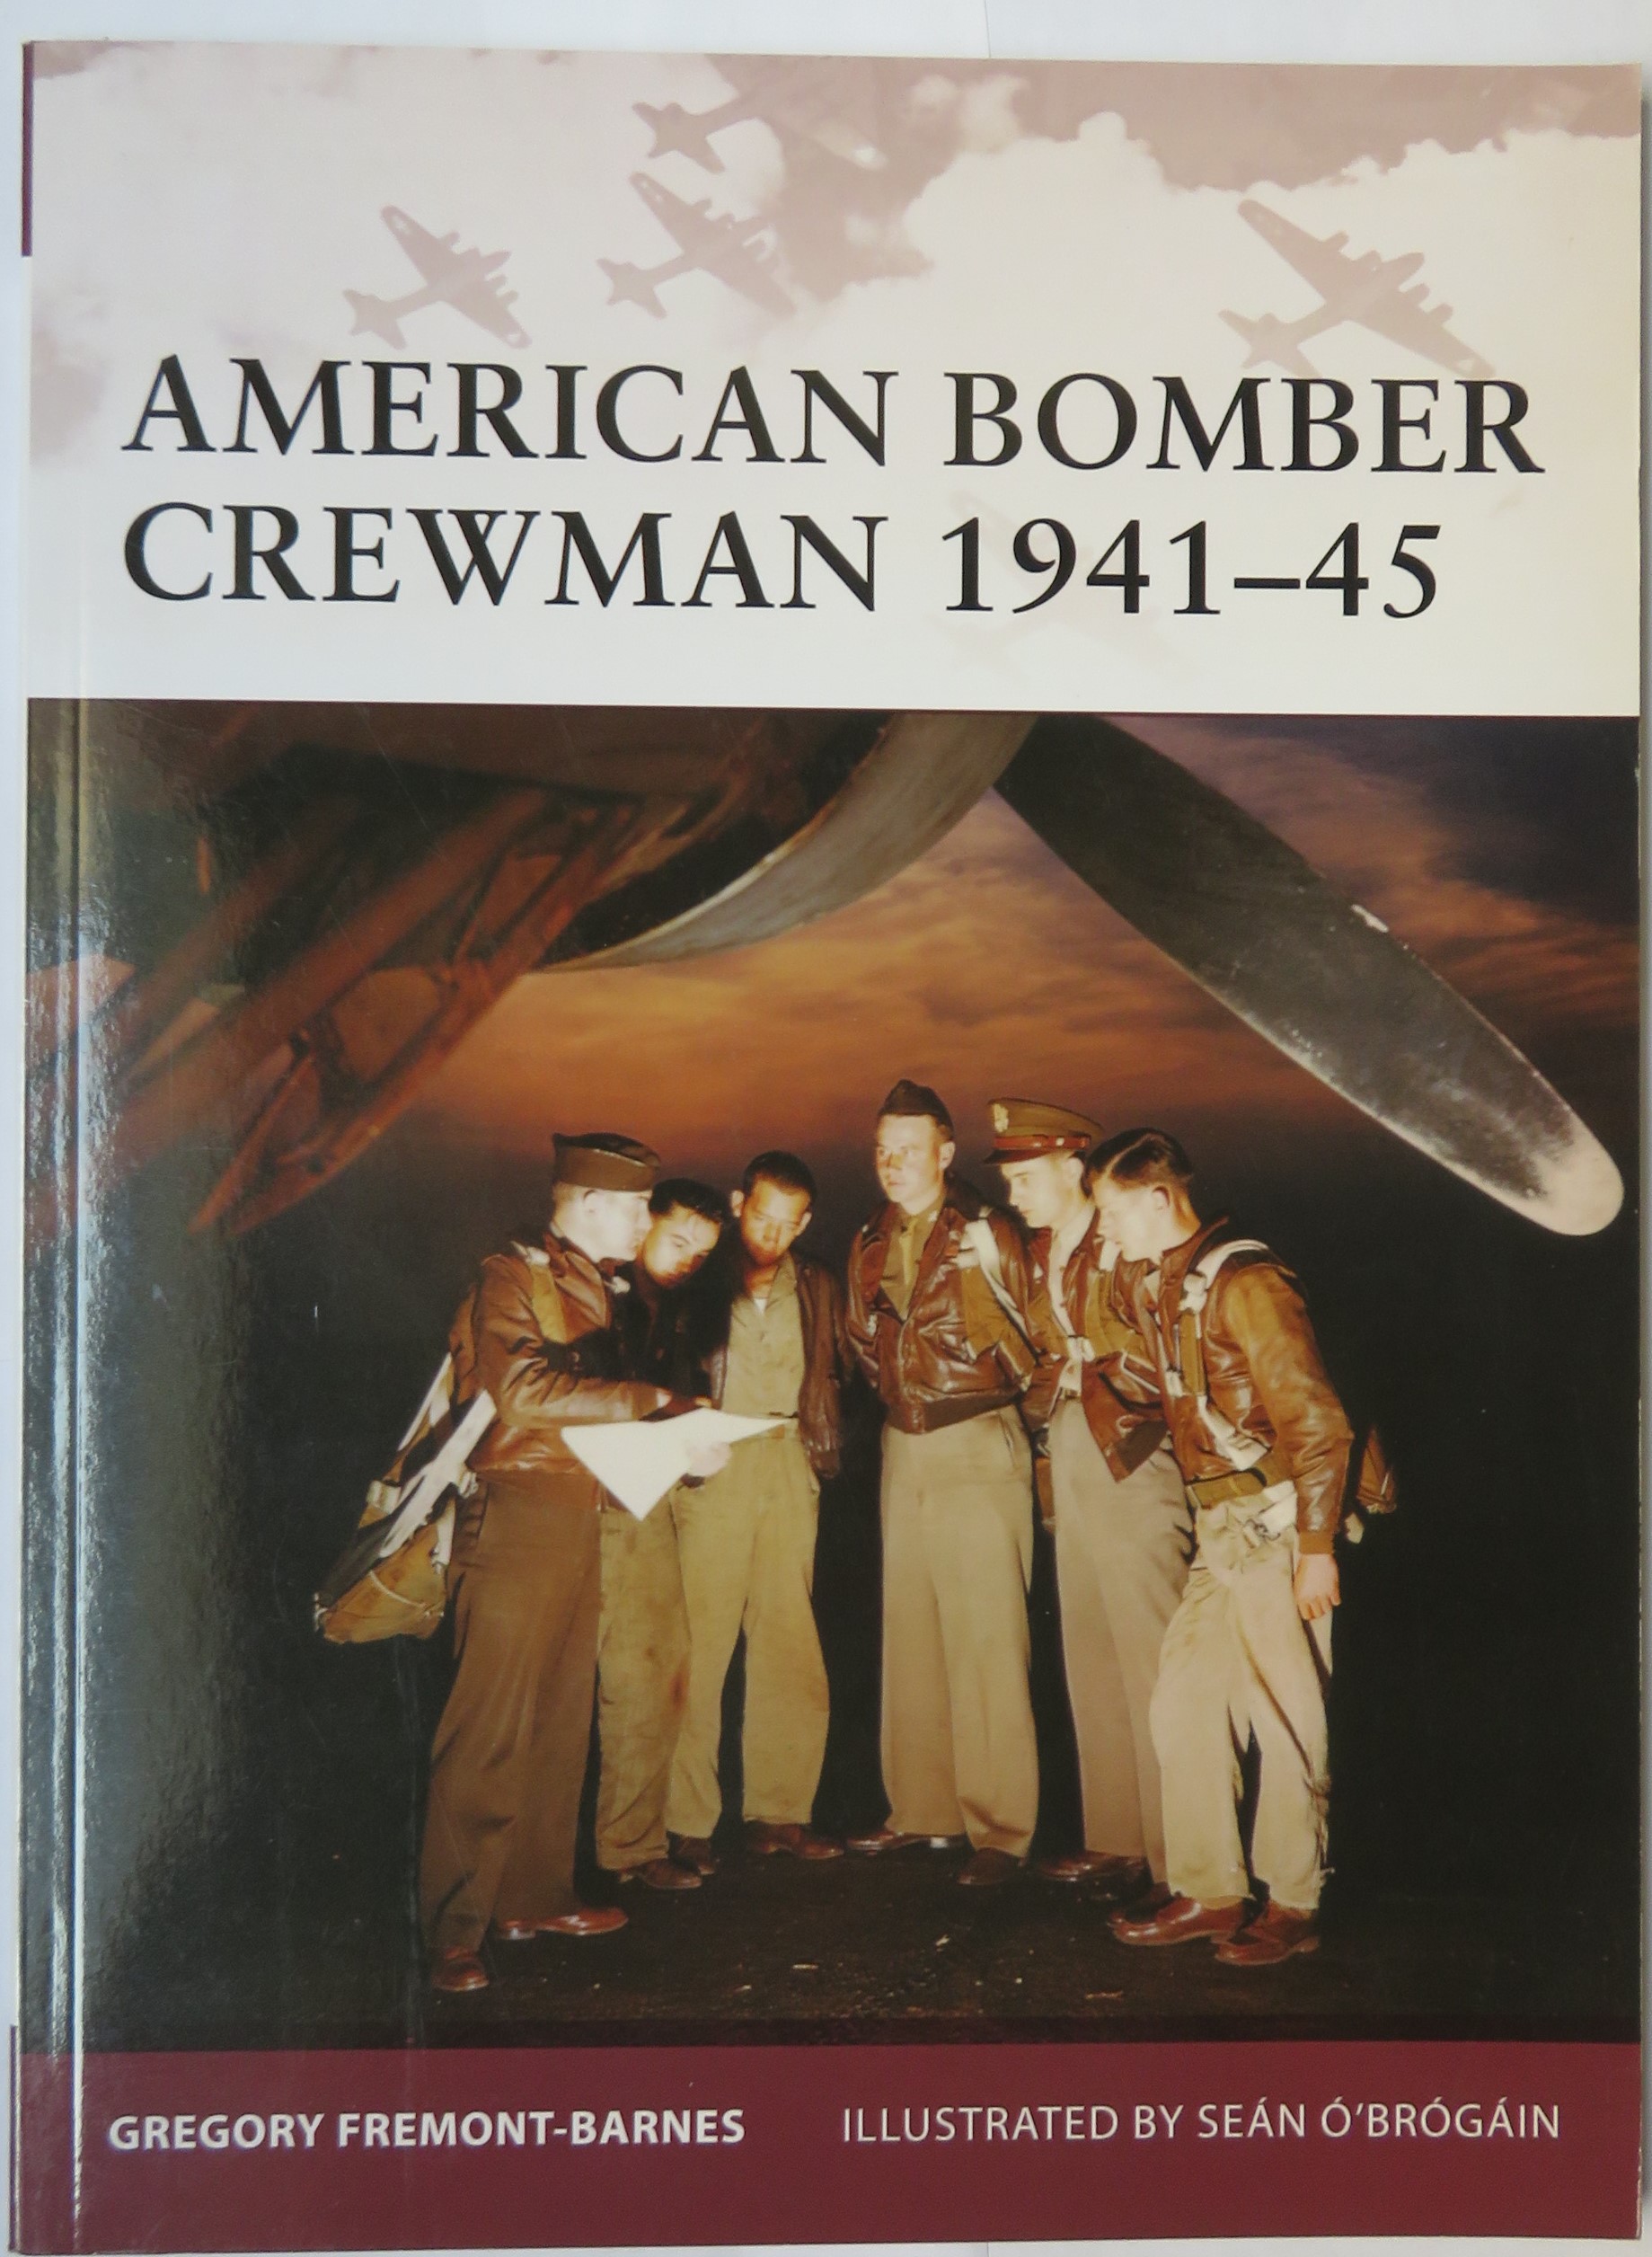 Warrior 119 American Bomber Crewman 1941-45